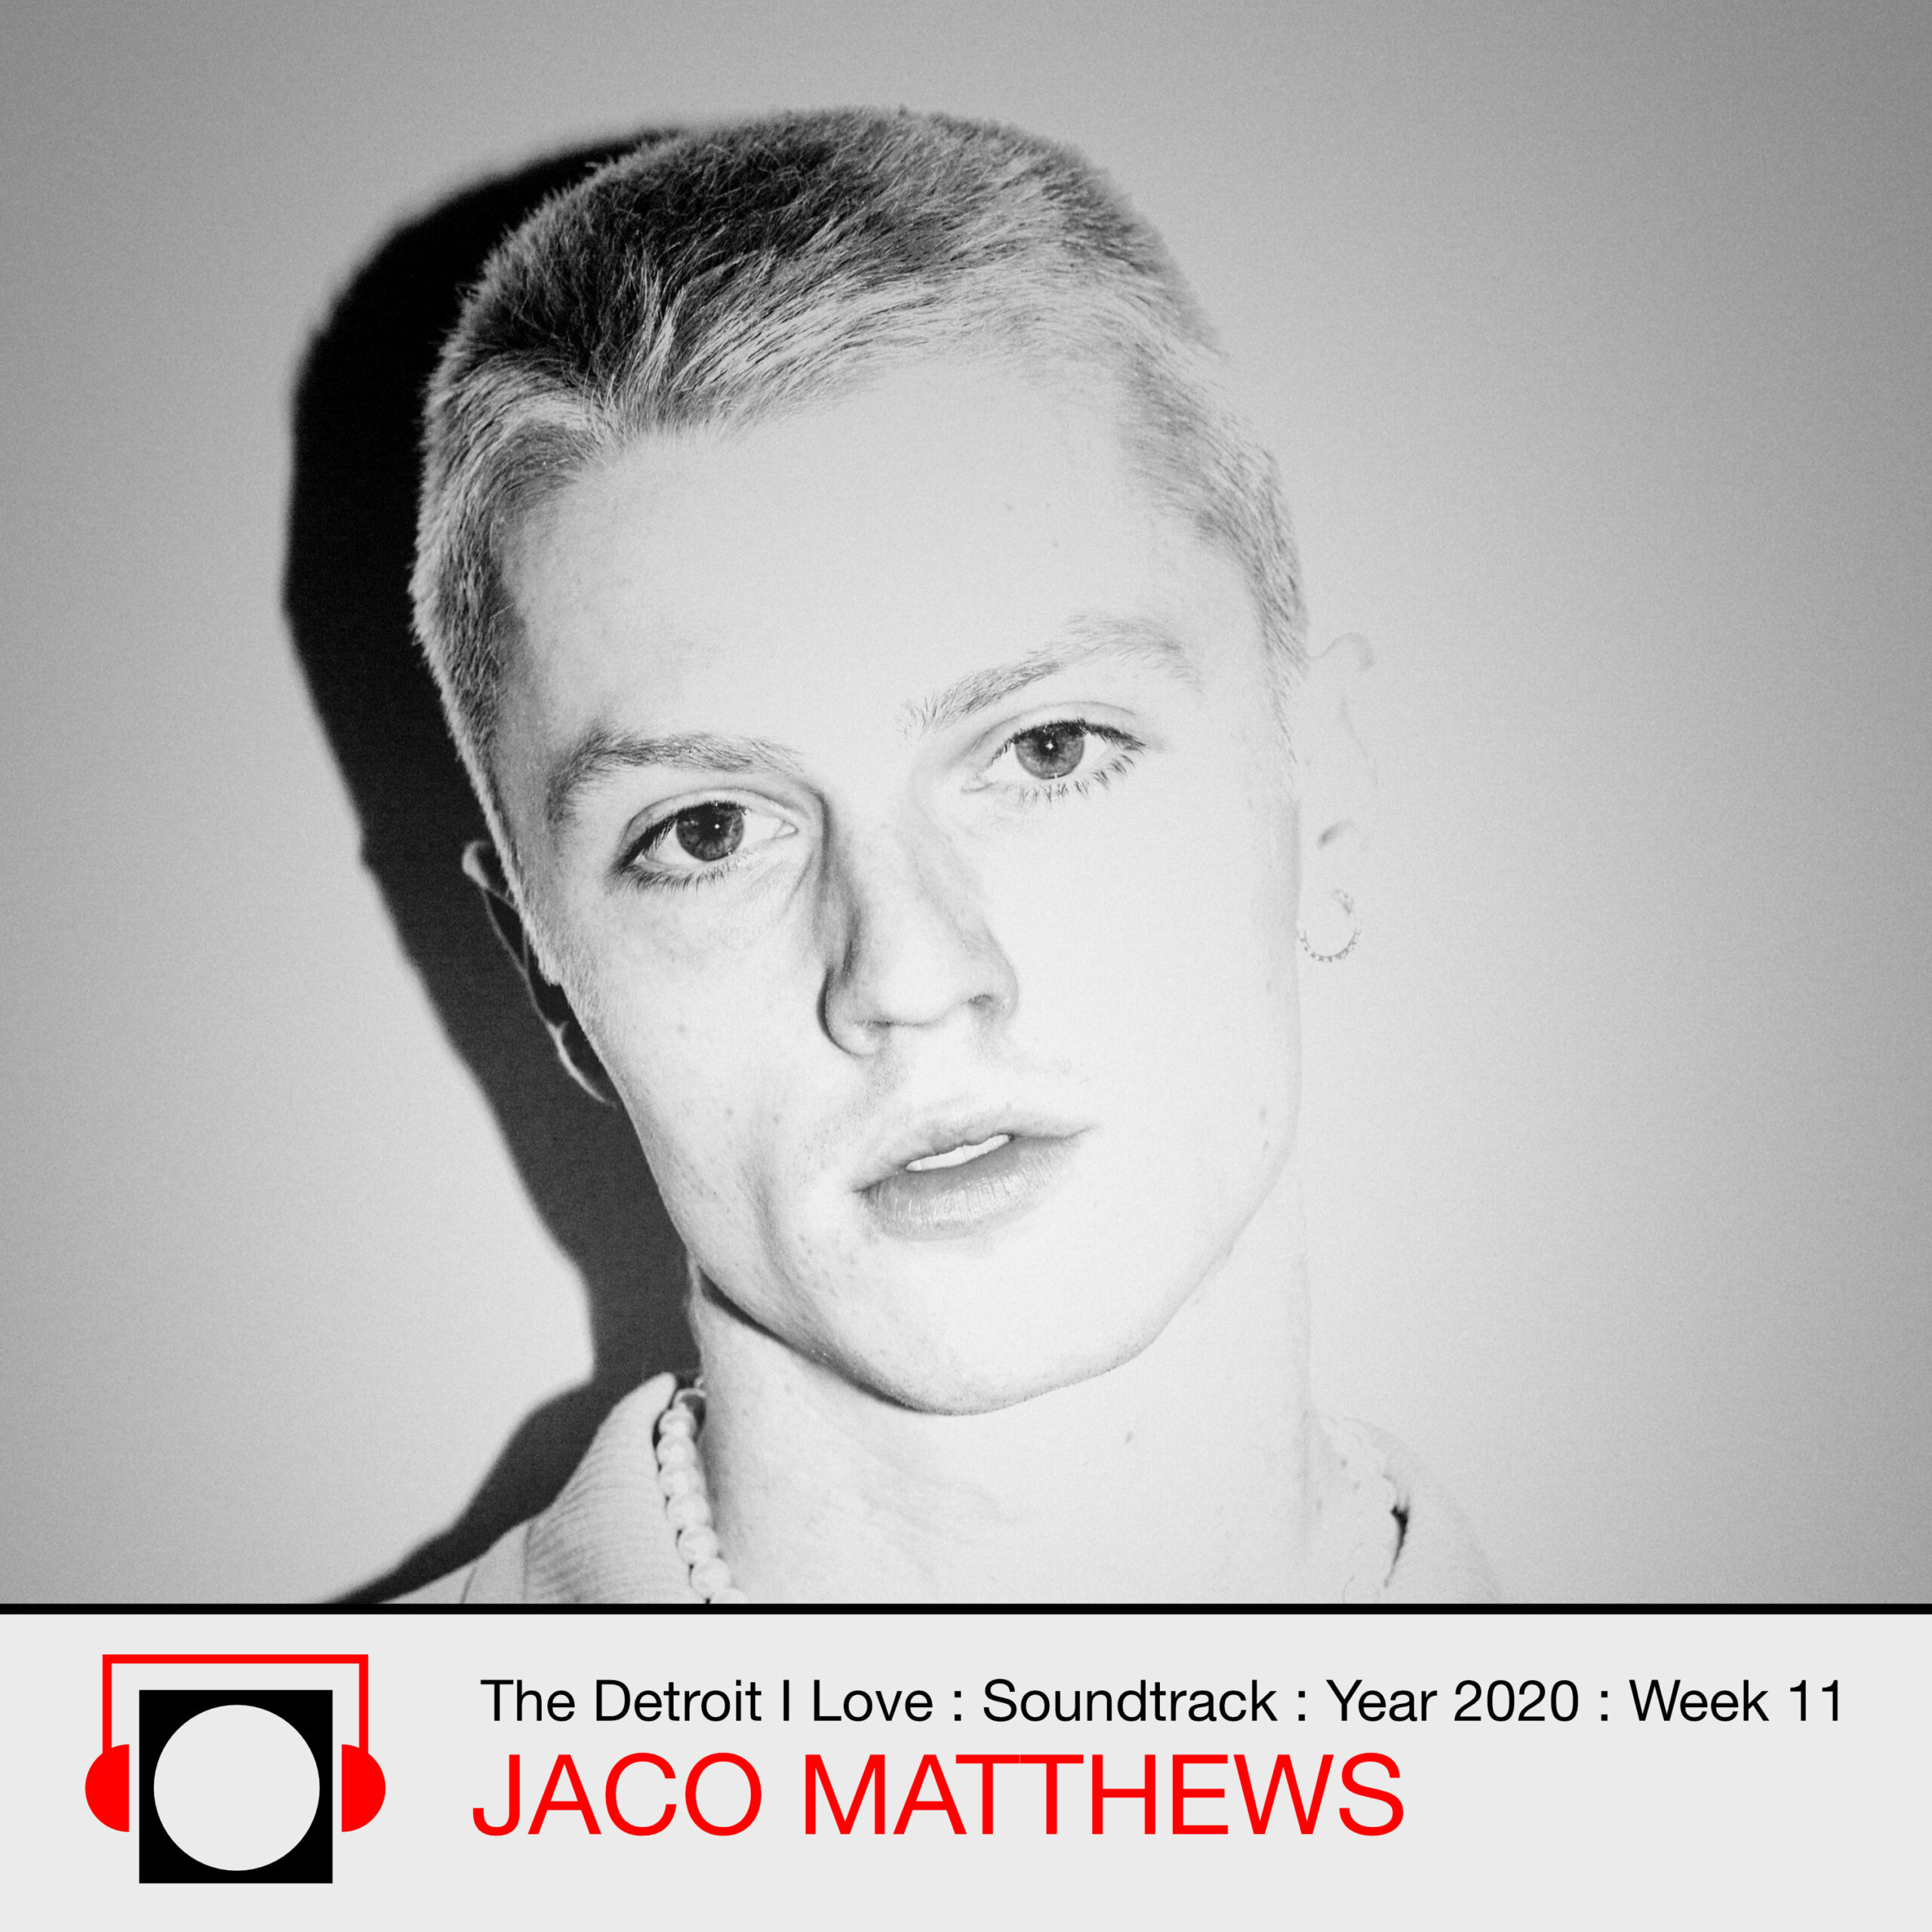 Soundtrack : Jaco Matthews